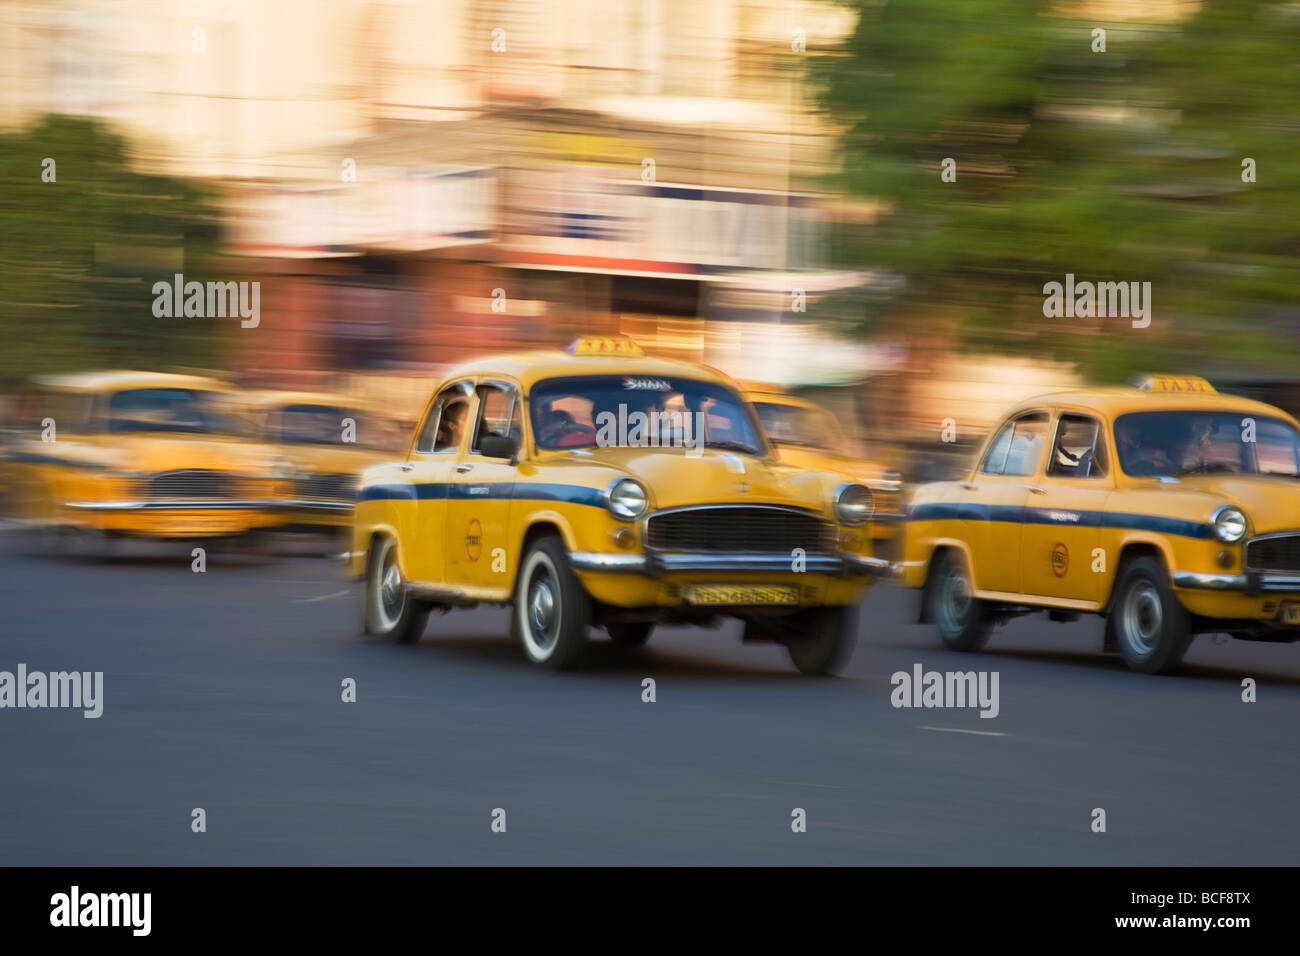 India, West Bengal, Kolkata, Calcutta, Yellow ambassador taxis Stock Photo